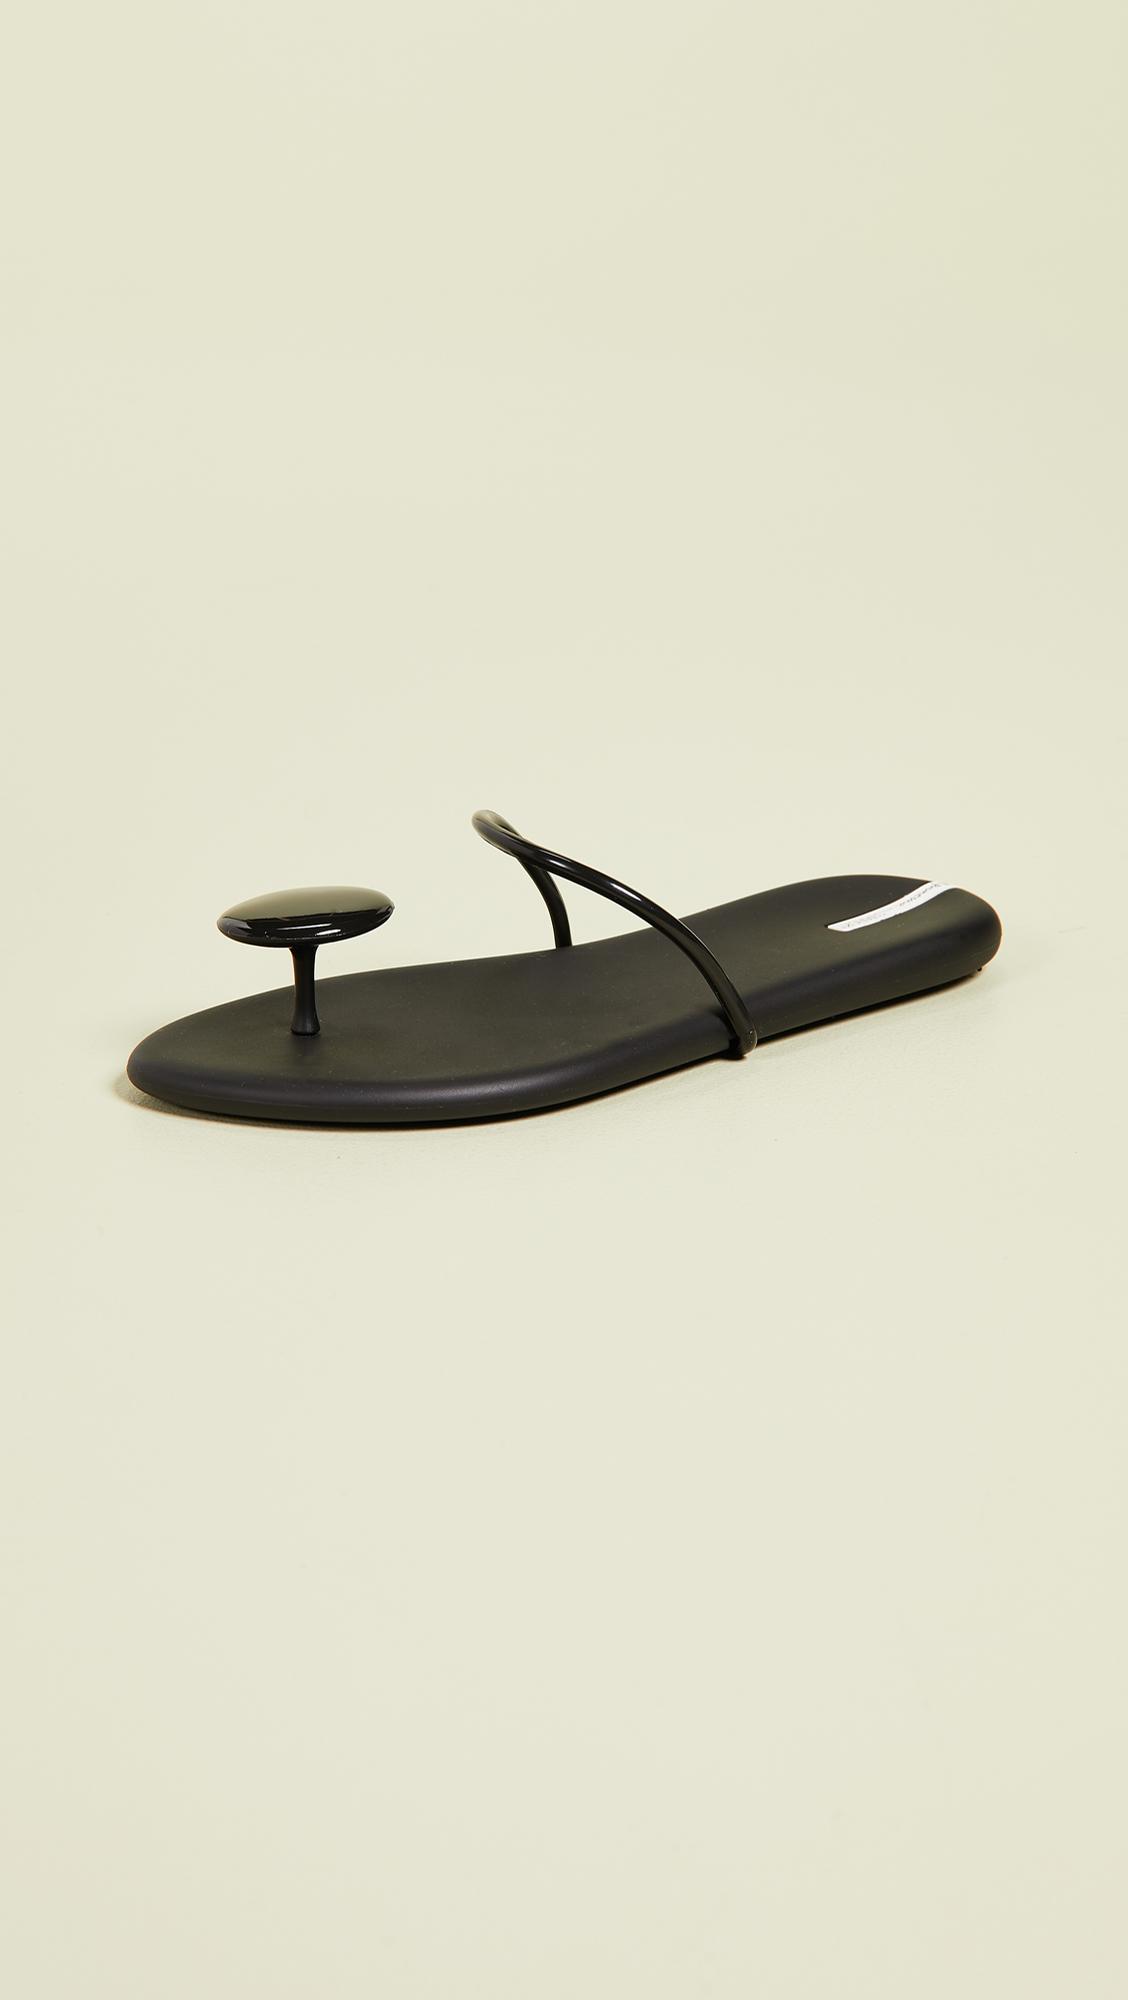 Ipanema Rubber Philippe Starck Thing U Ii Sandals in Black/Black (Black) |  Lyst Canada